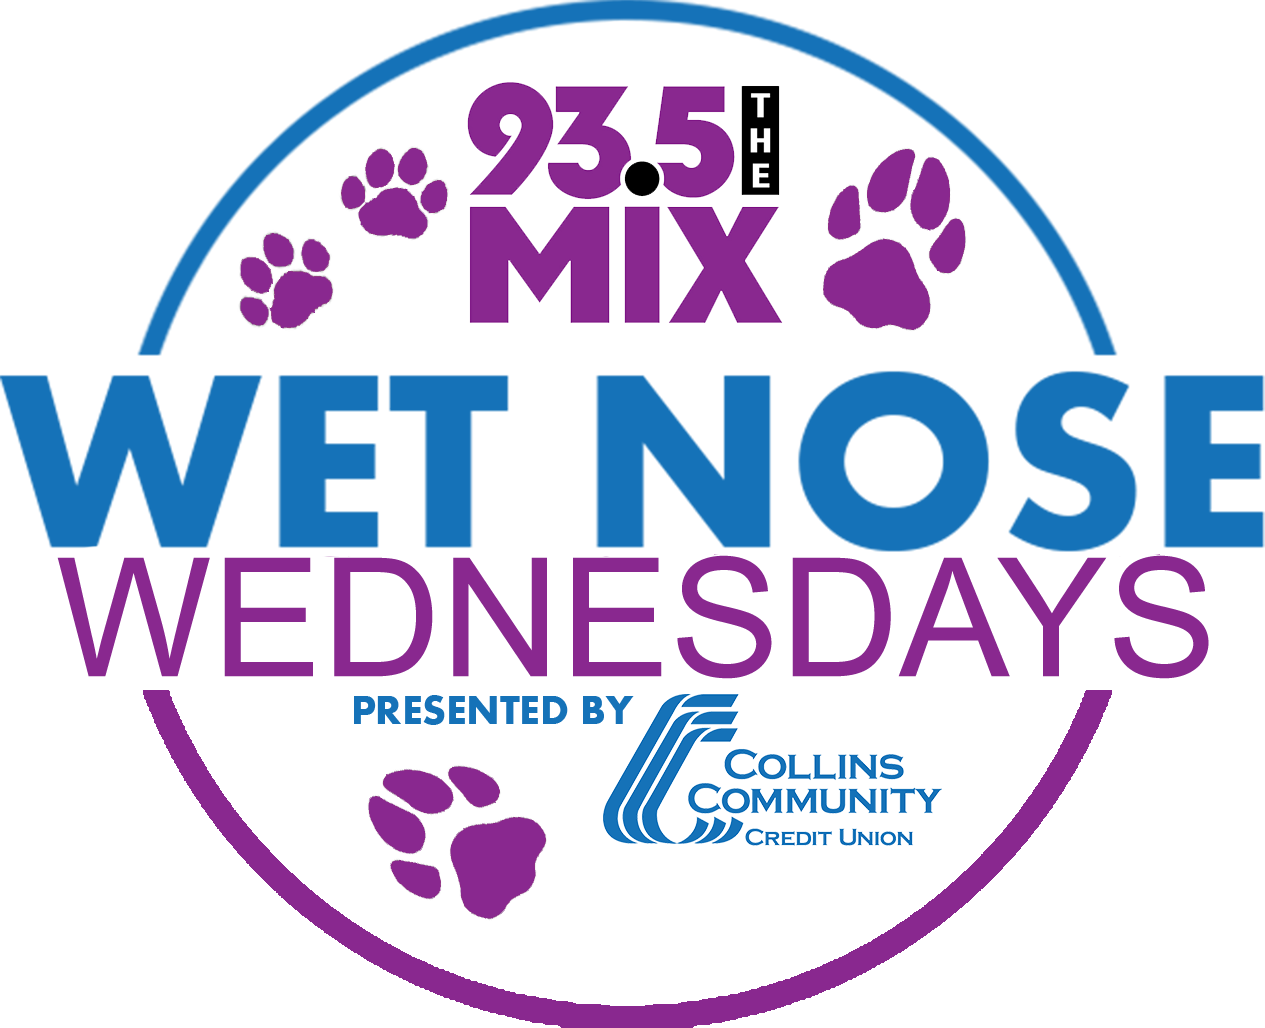 Wet Nose Wednesday